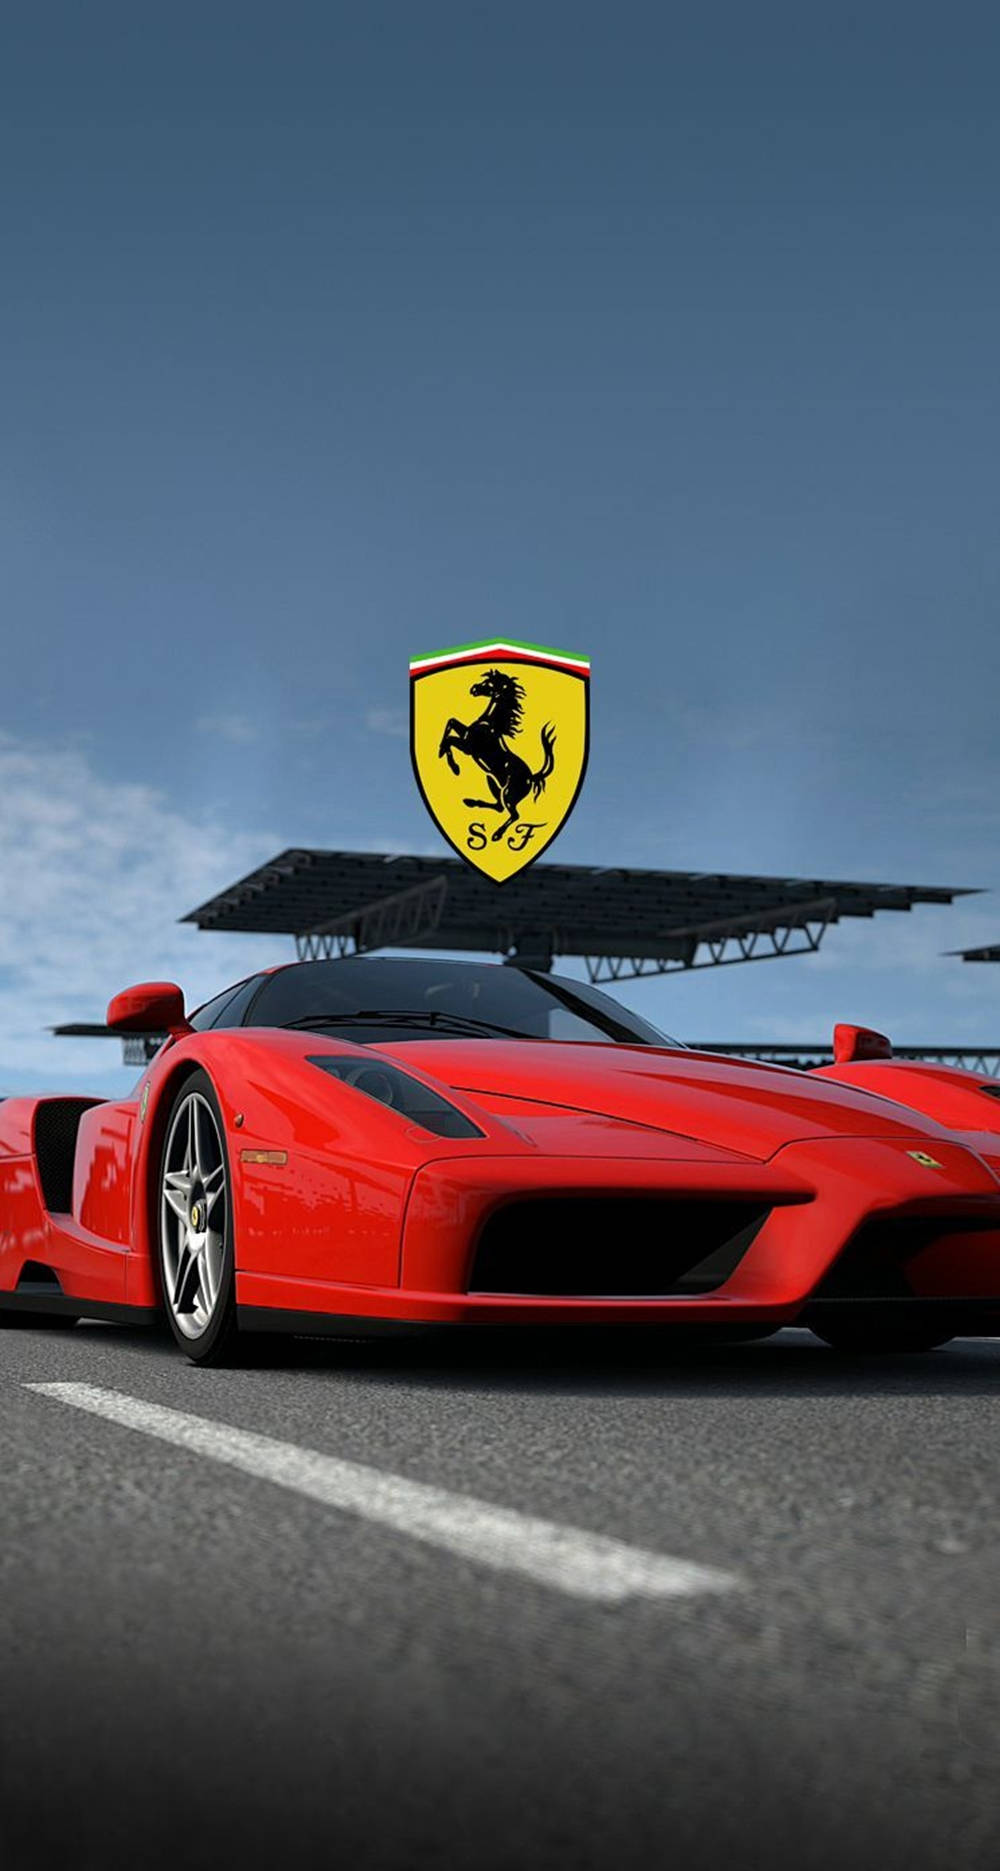 Ferrari iPhone Wallpaper